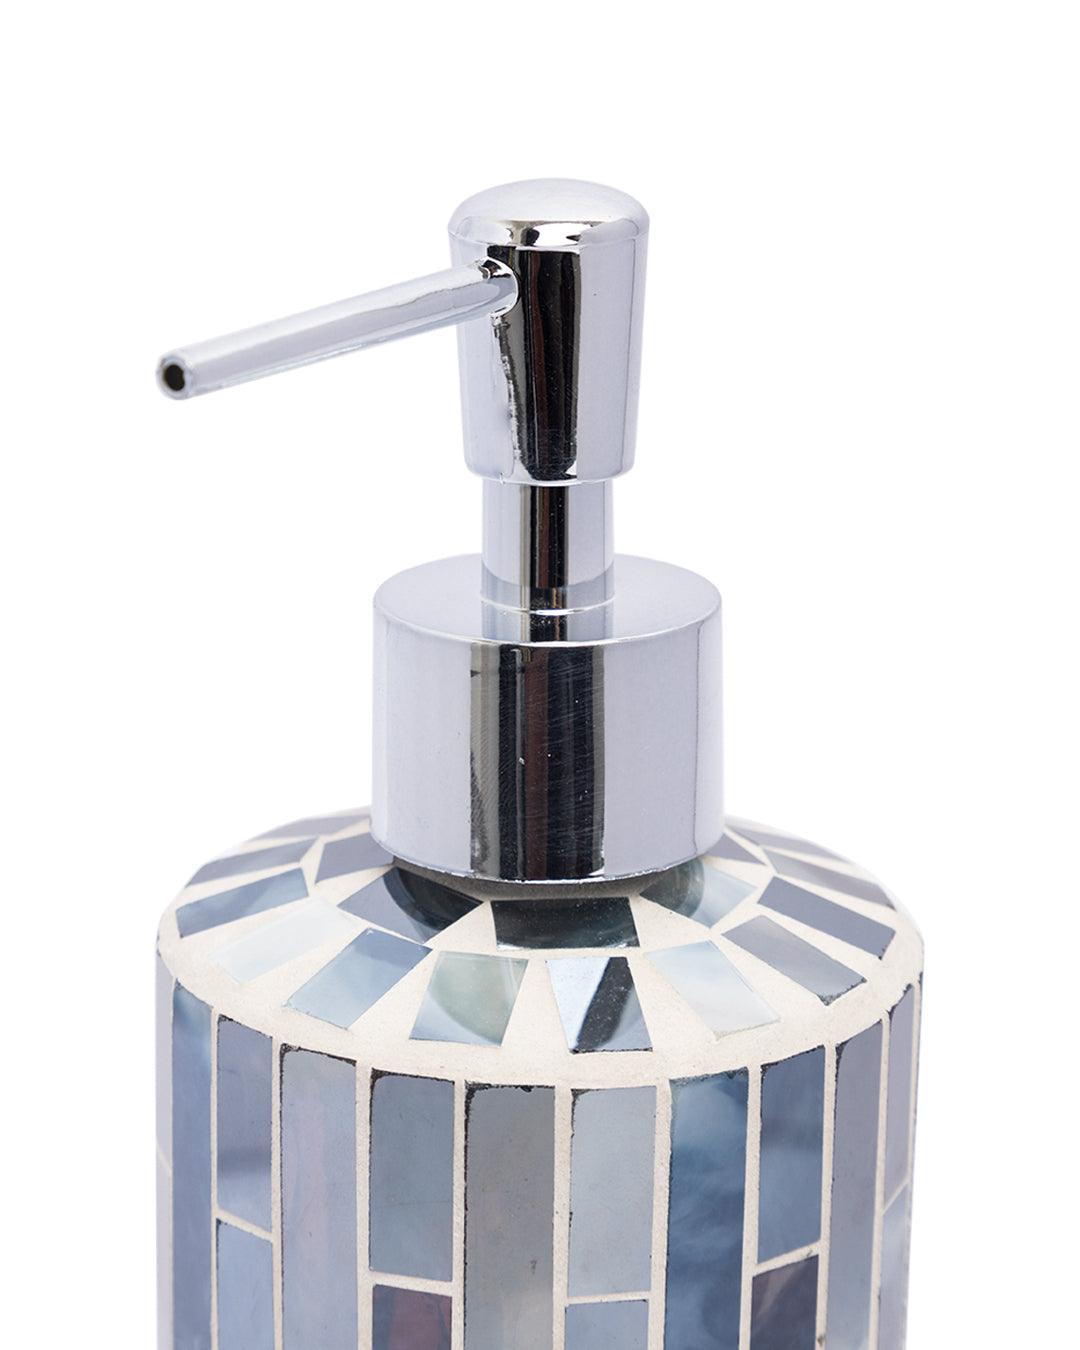 Market99 Soap Dispenser, Silver, Glass, 400 mL - MARKET 99